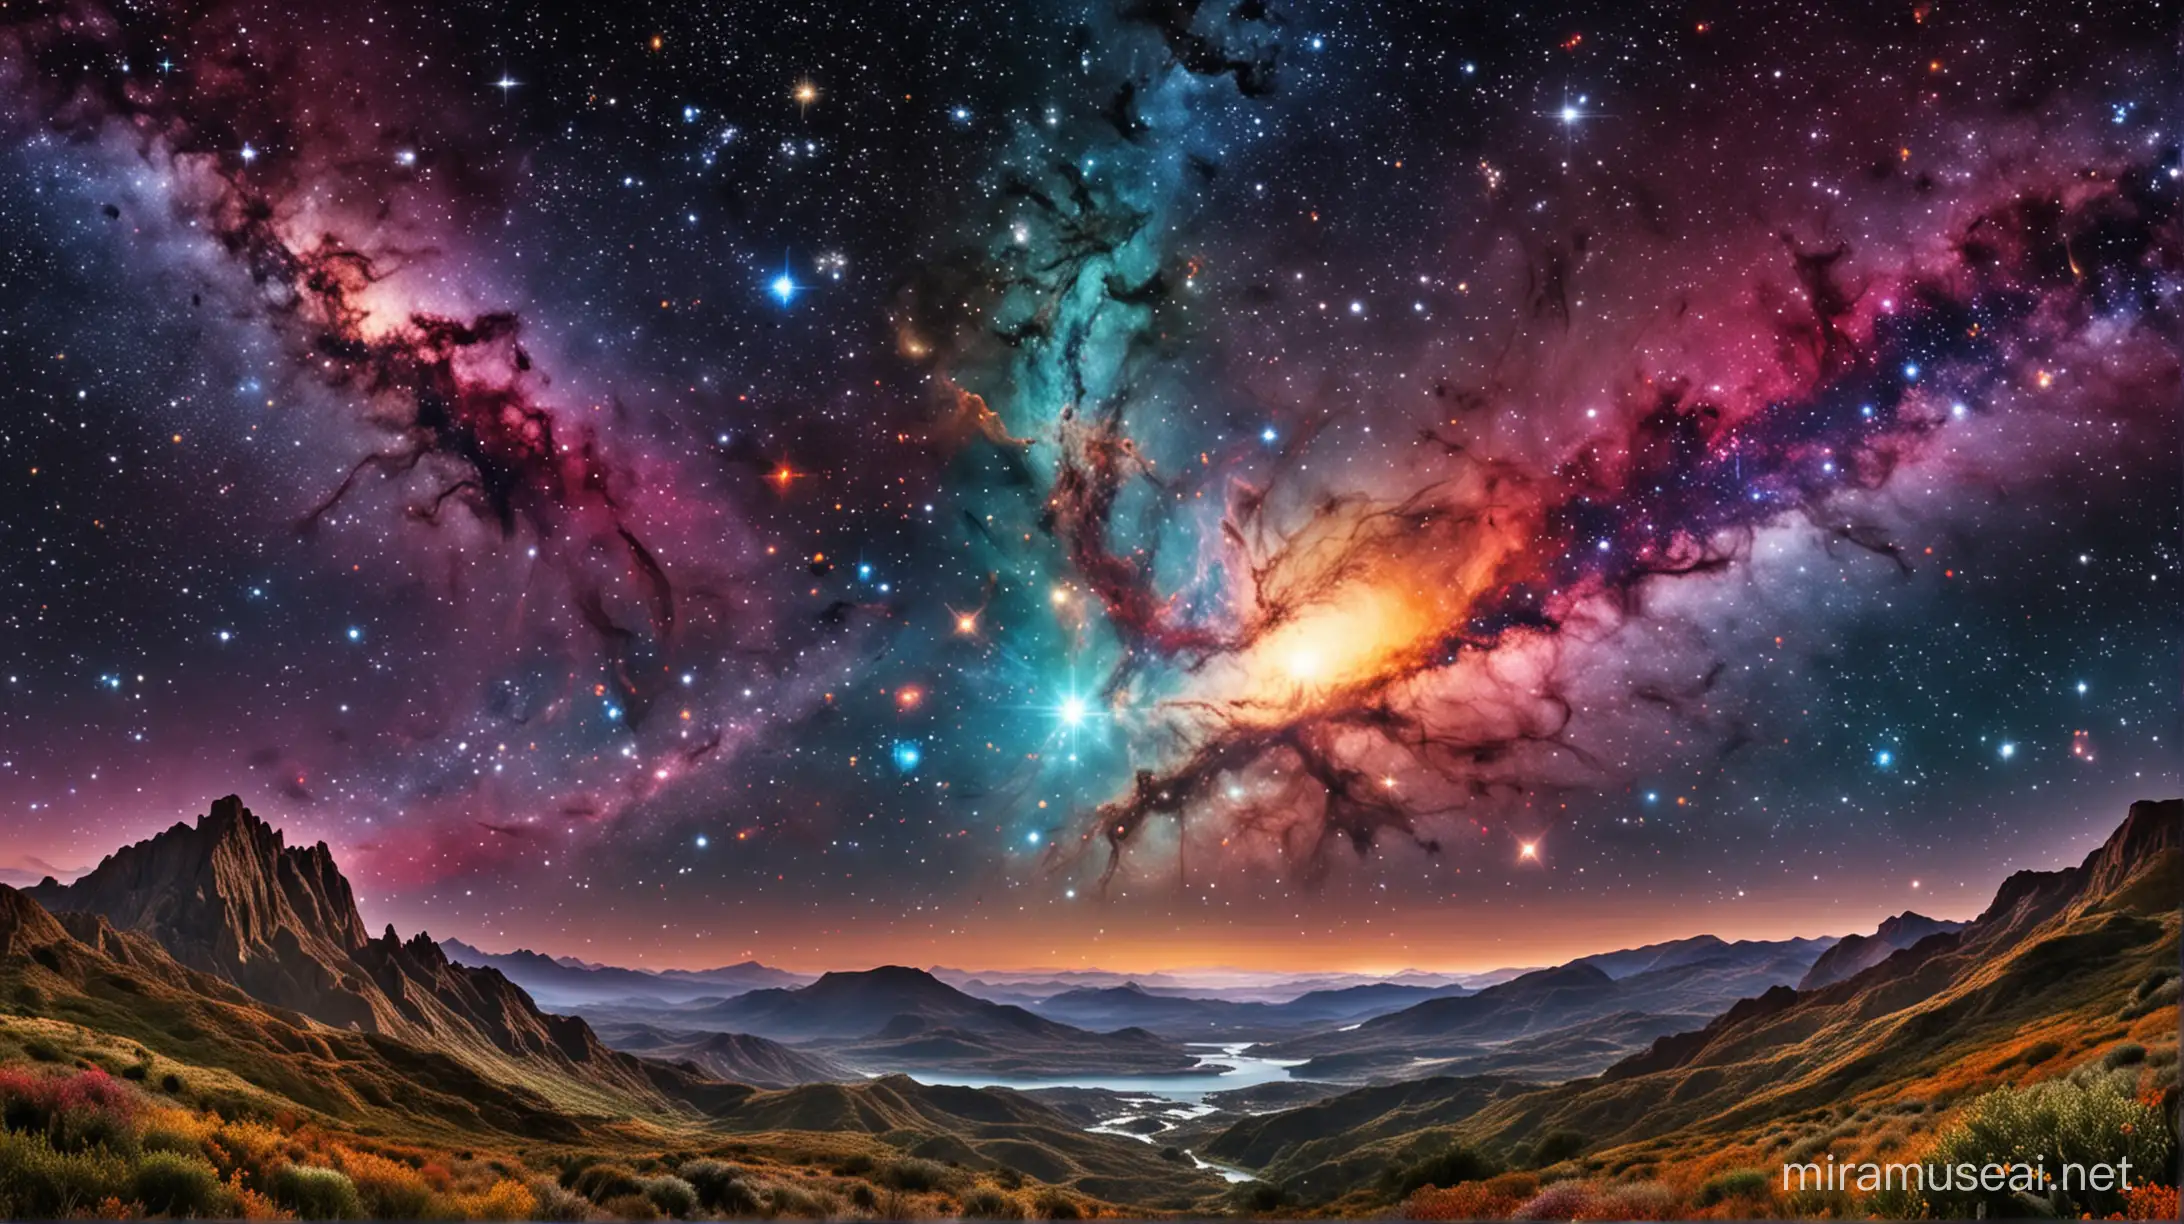 Cosmic Vastness Big Bang Theory and Astronomers